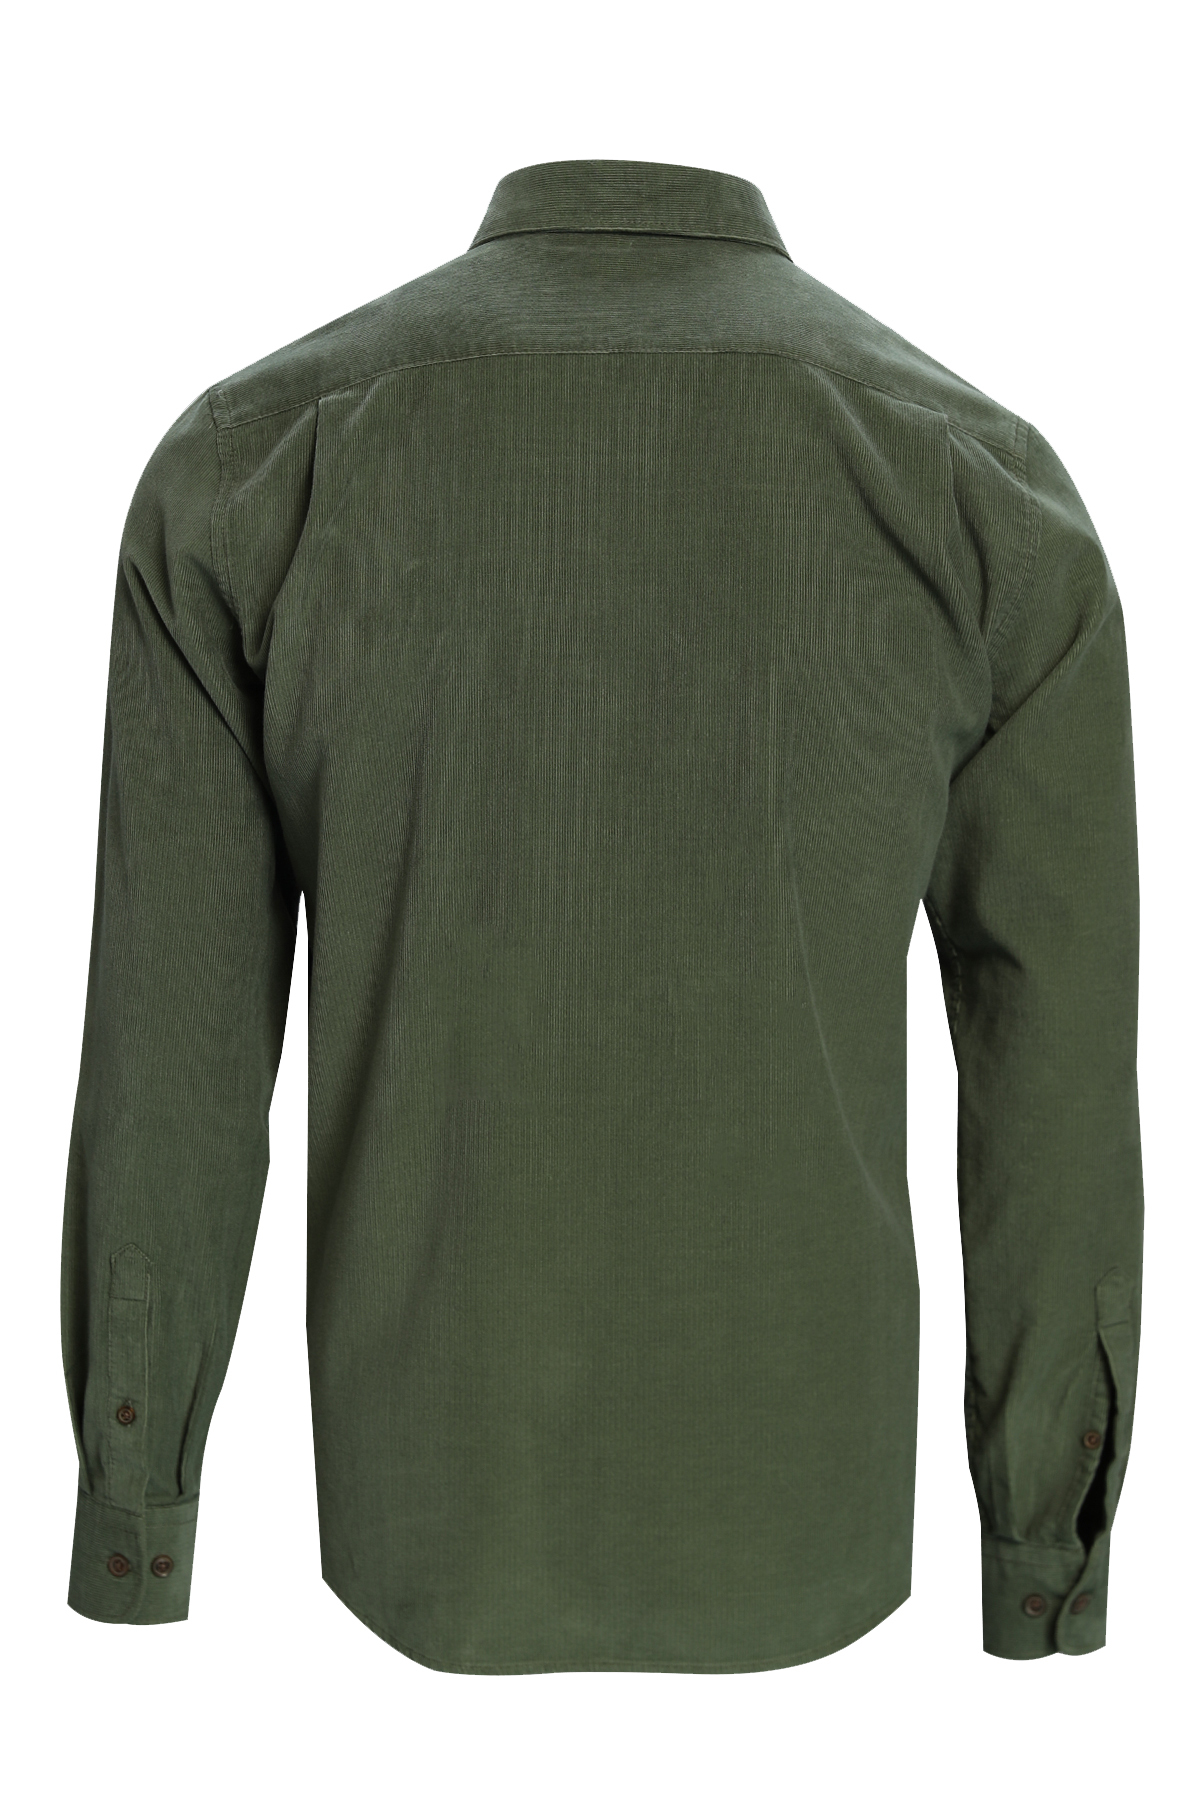 Tesa Erkek Spor Gömlek Comfort Slim Fit Yeşil